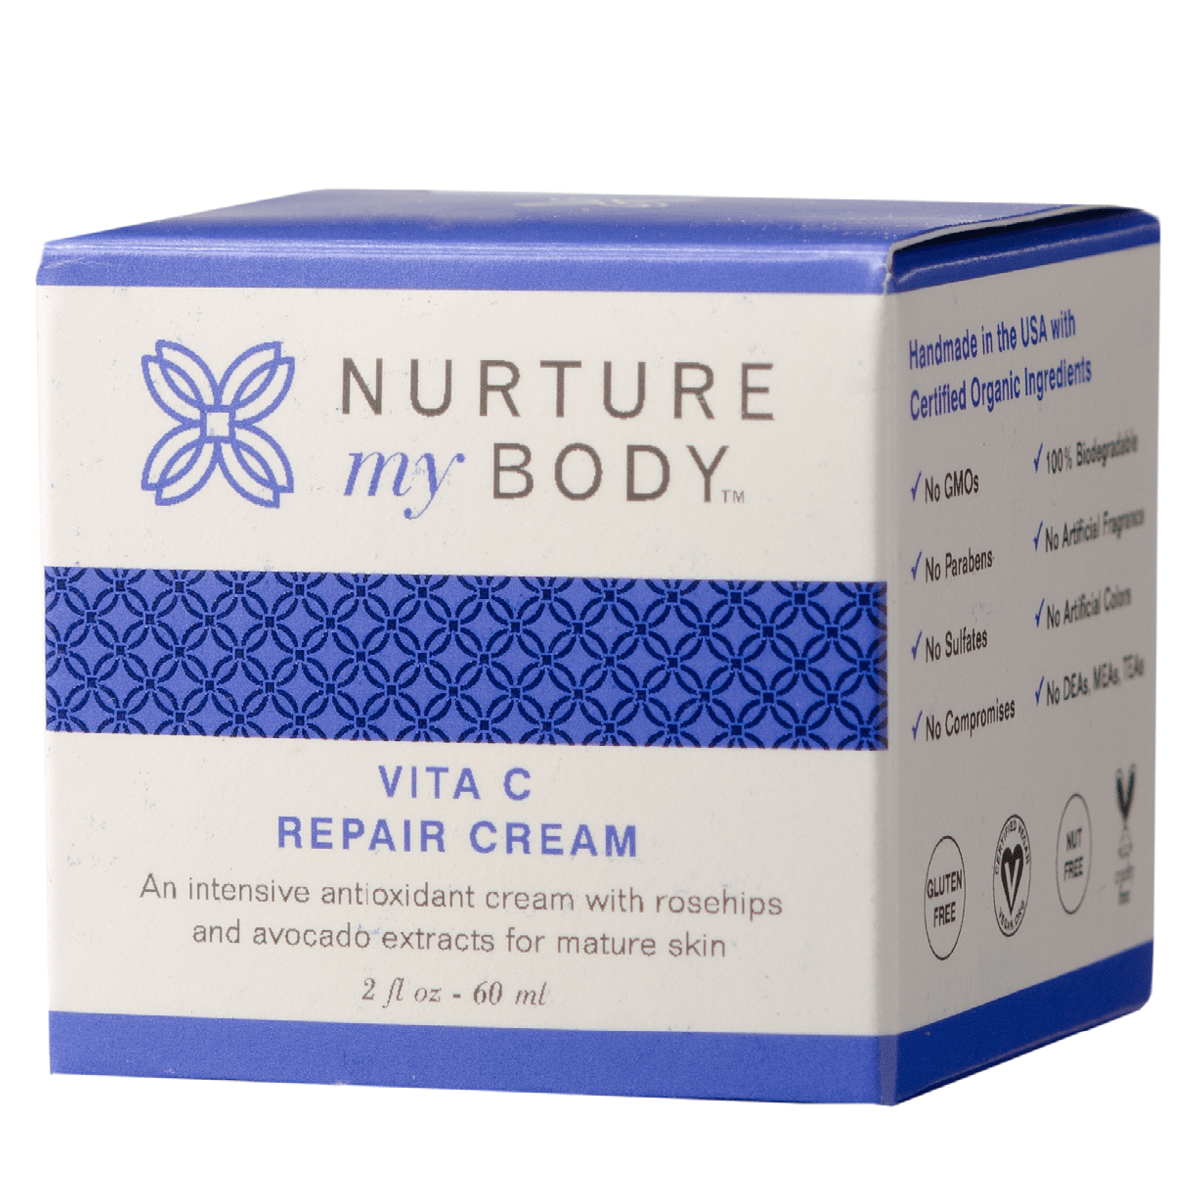 All Natural And Organic Bonaticals In Vita C Cream For Anti Aging Skincare By Nurture My Body